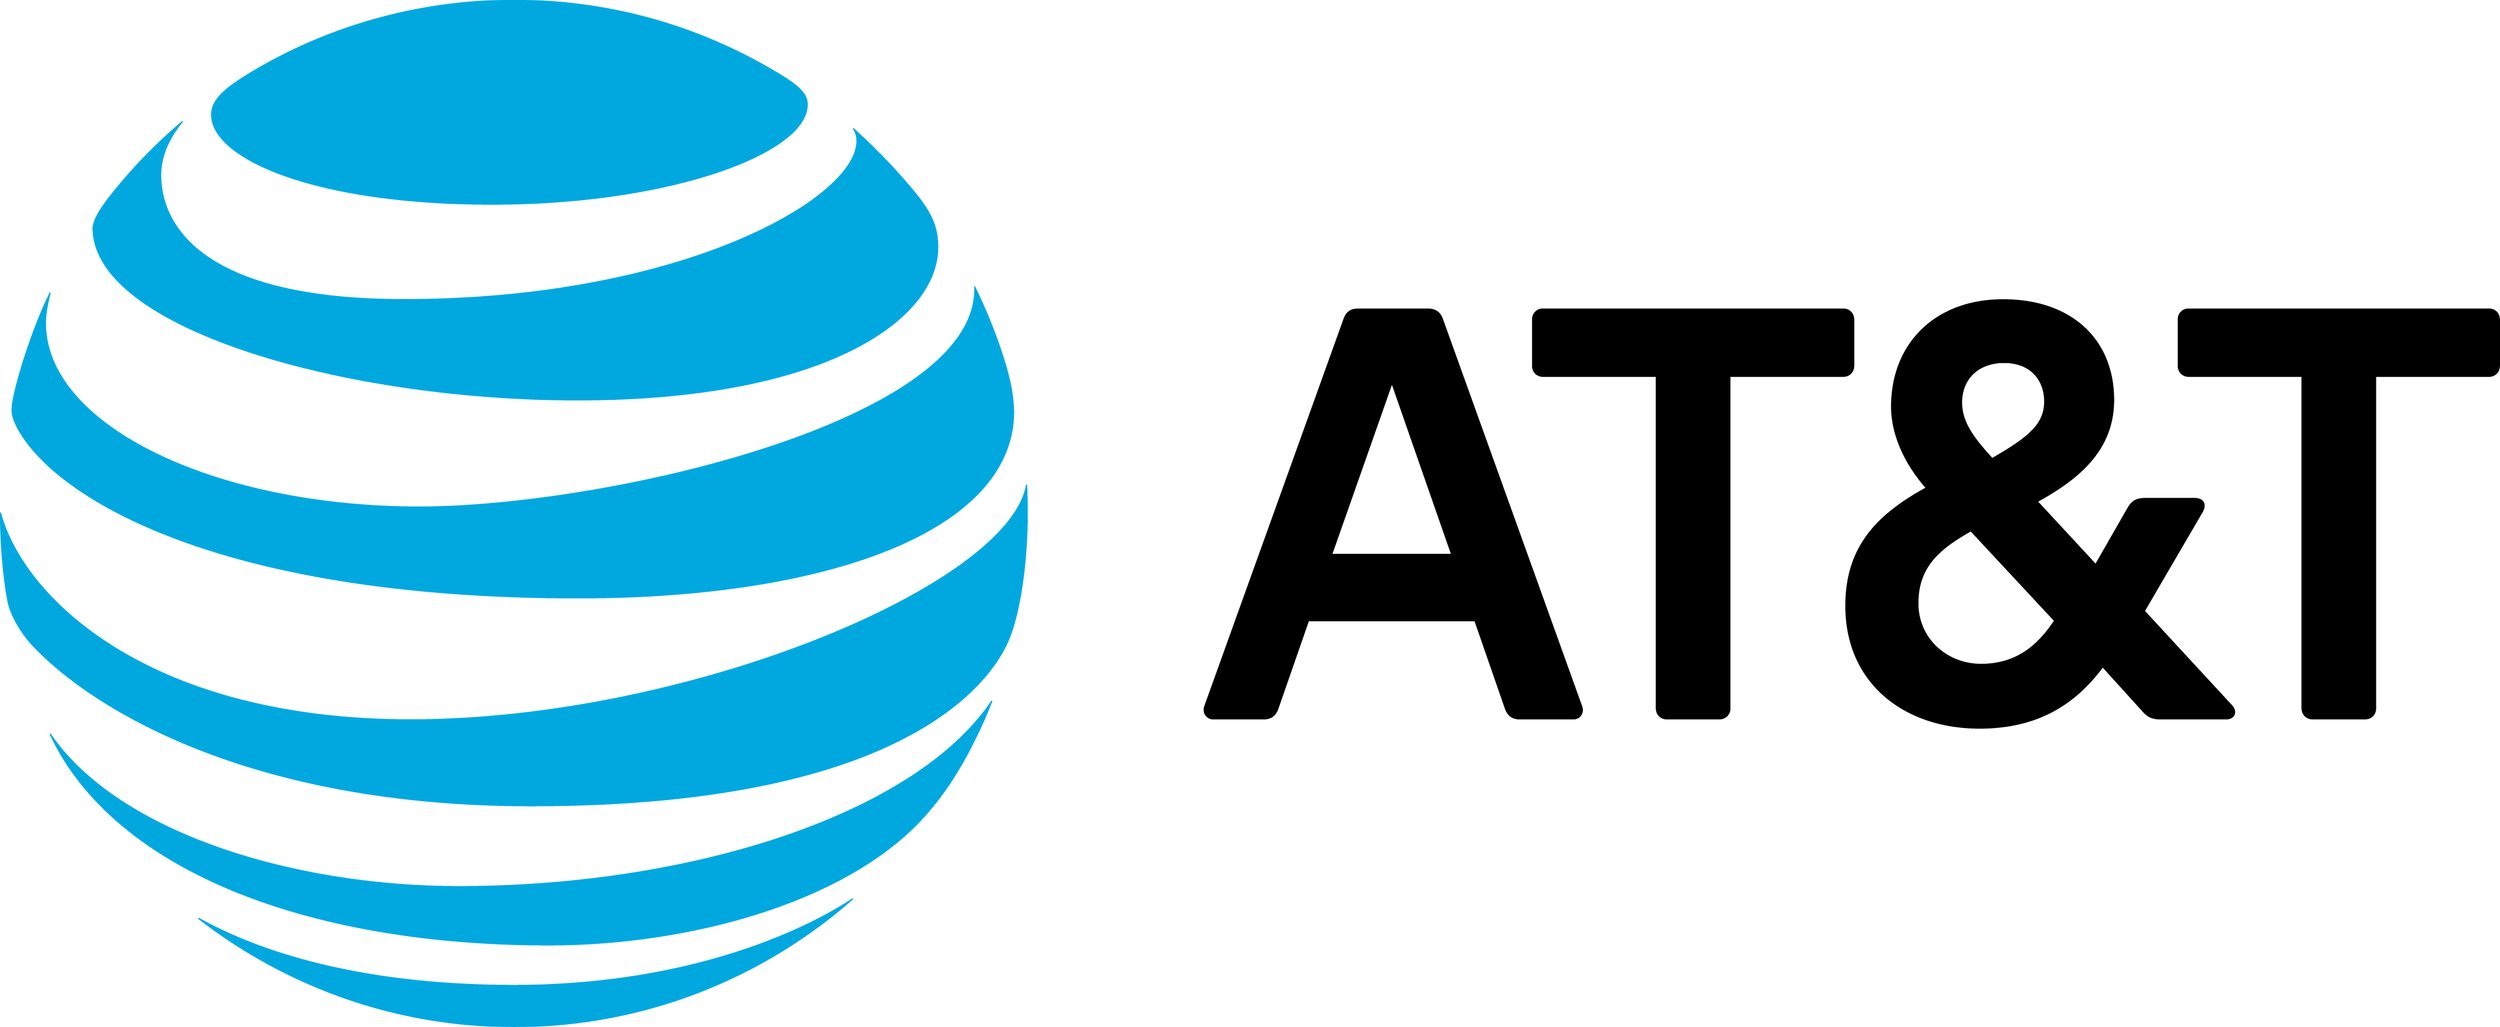 AT&T_logo_2016.jpg